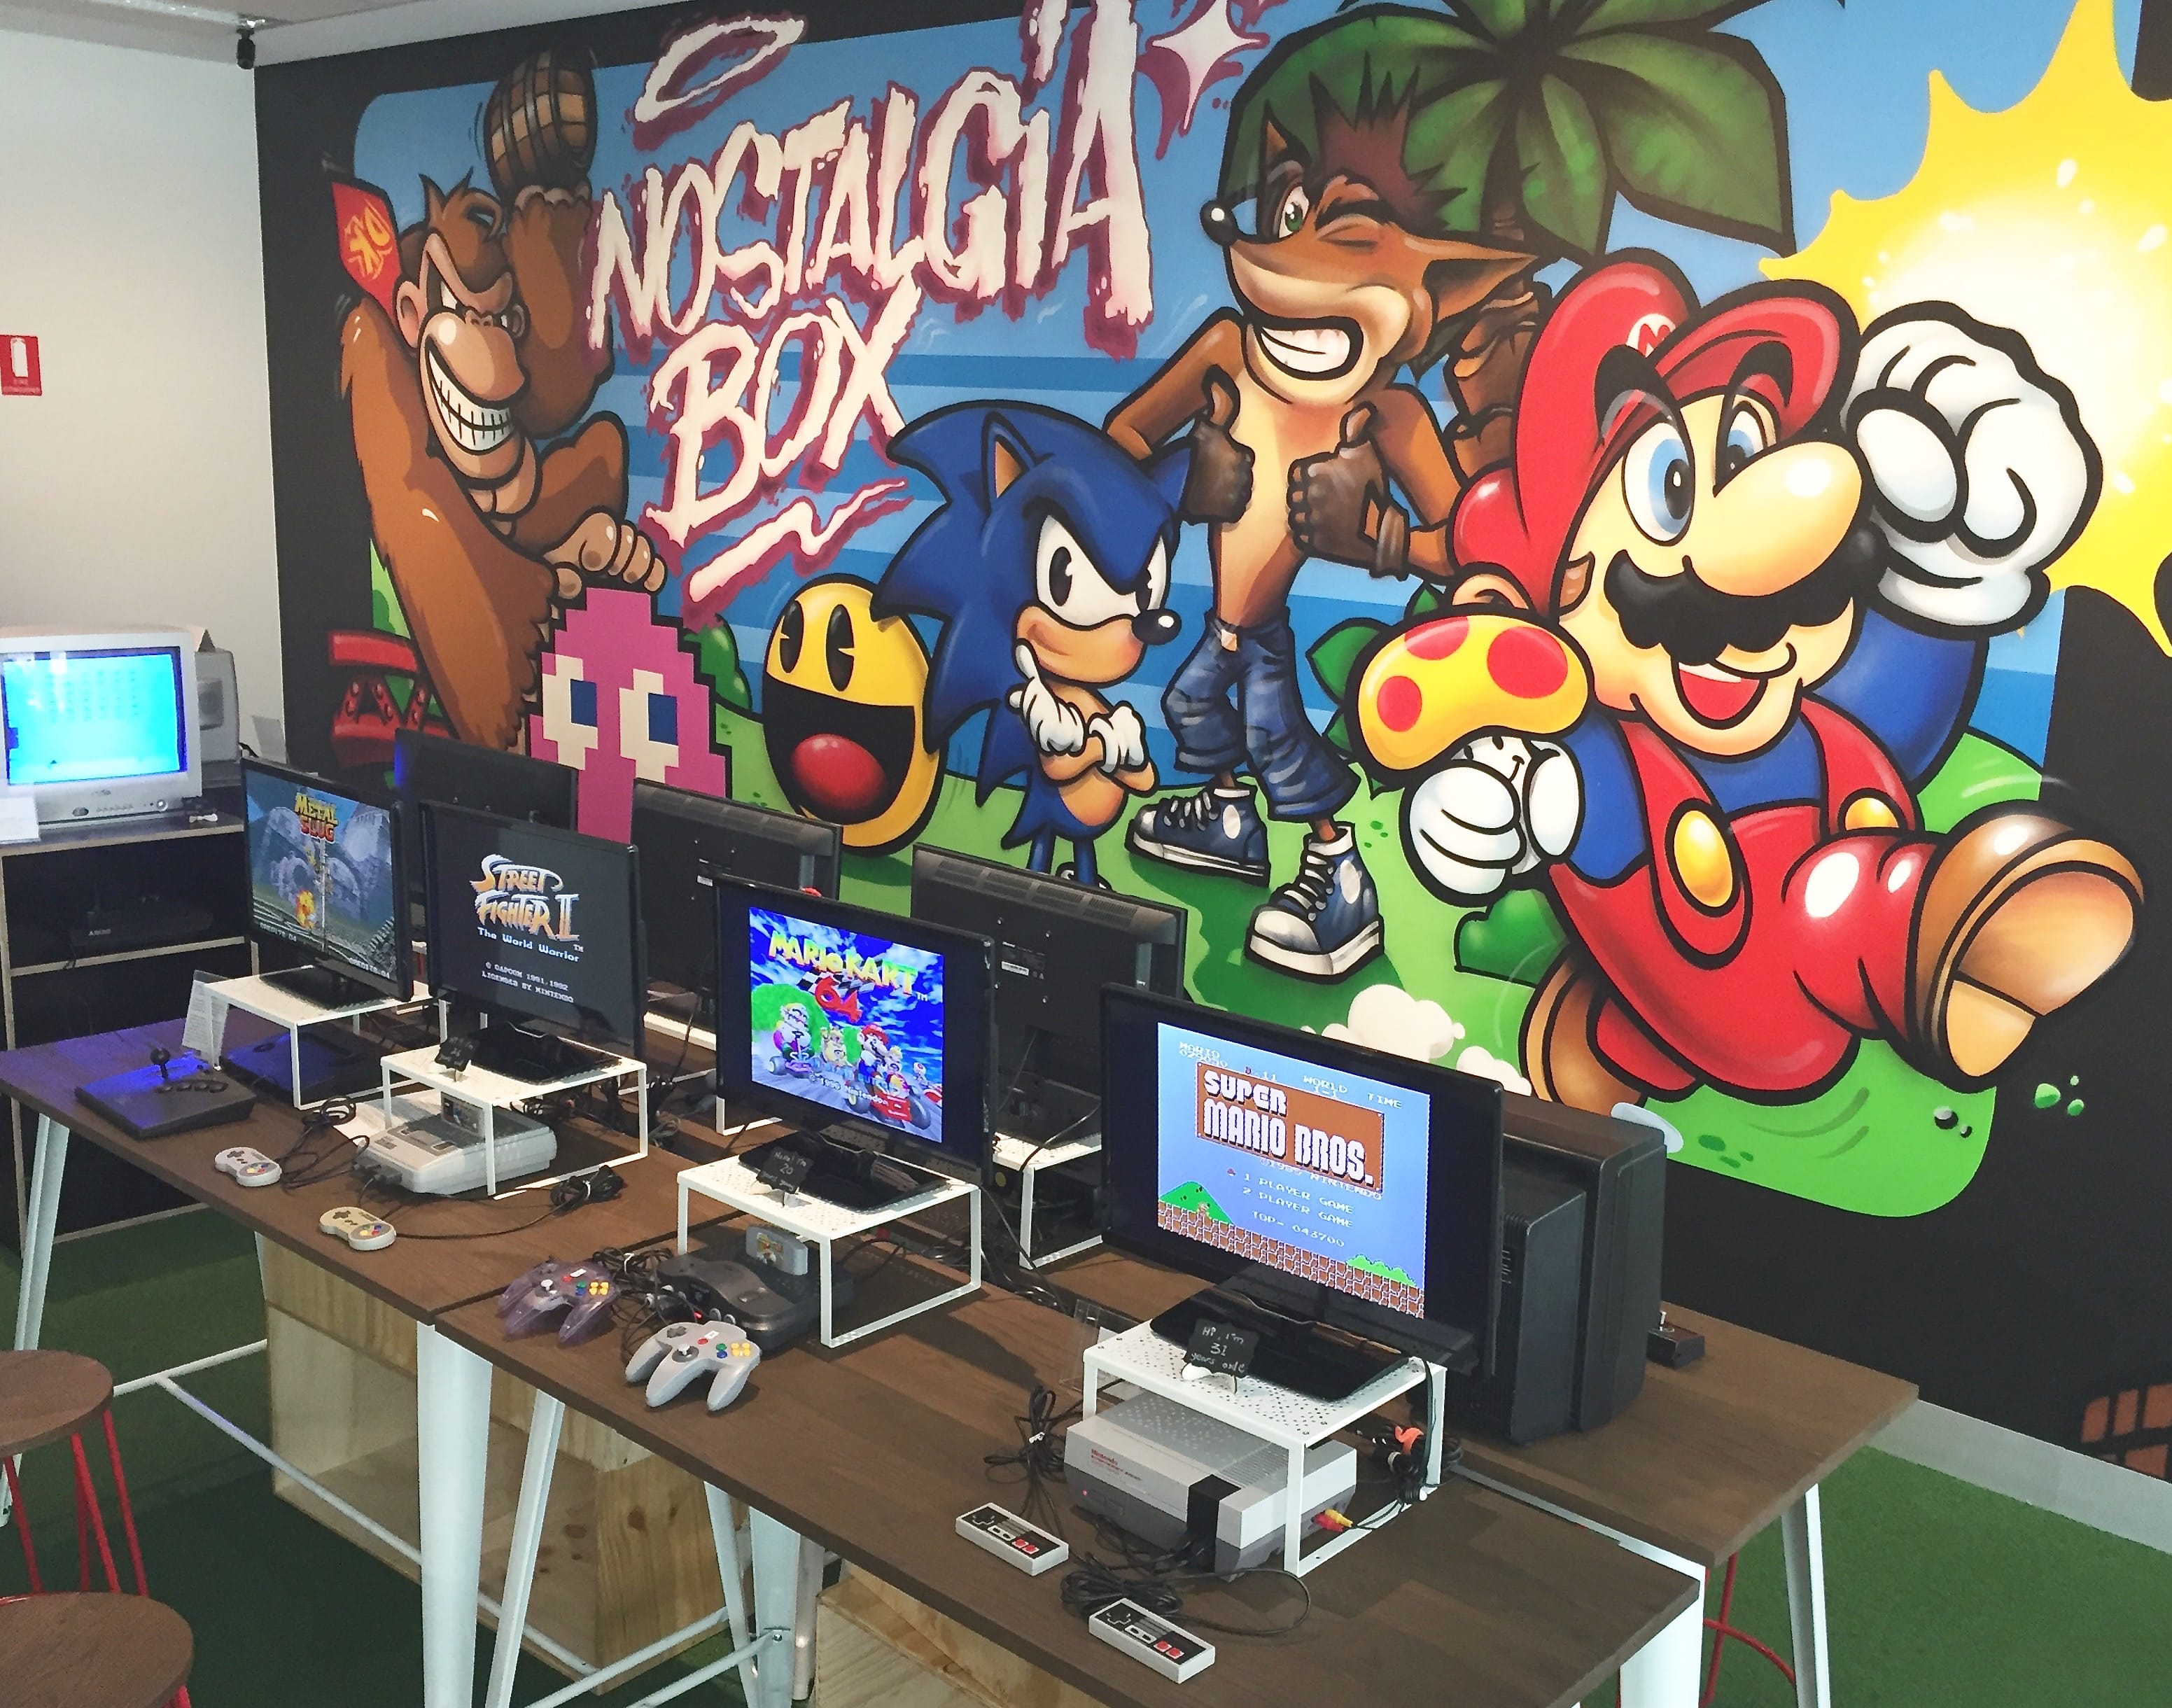 Enjoy a day at Australia's first video game museum, Nostalgia Box